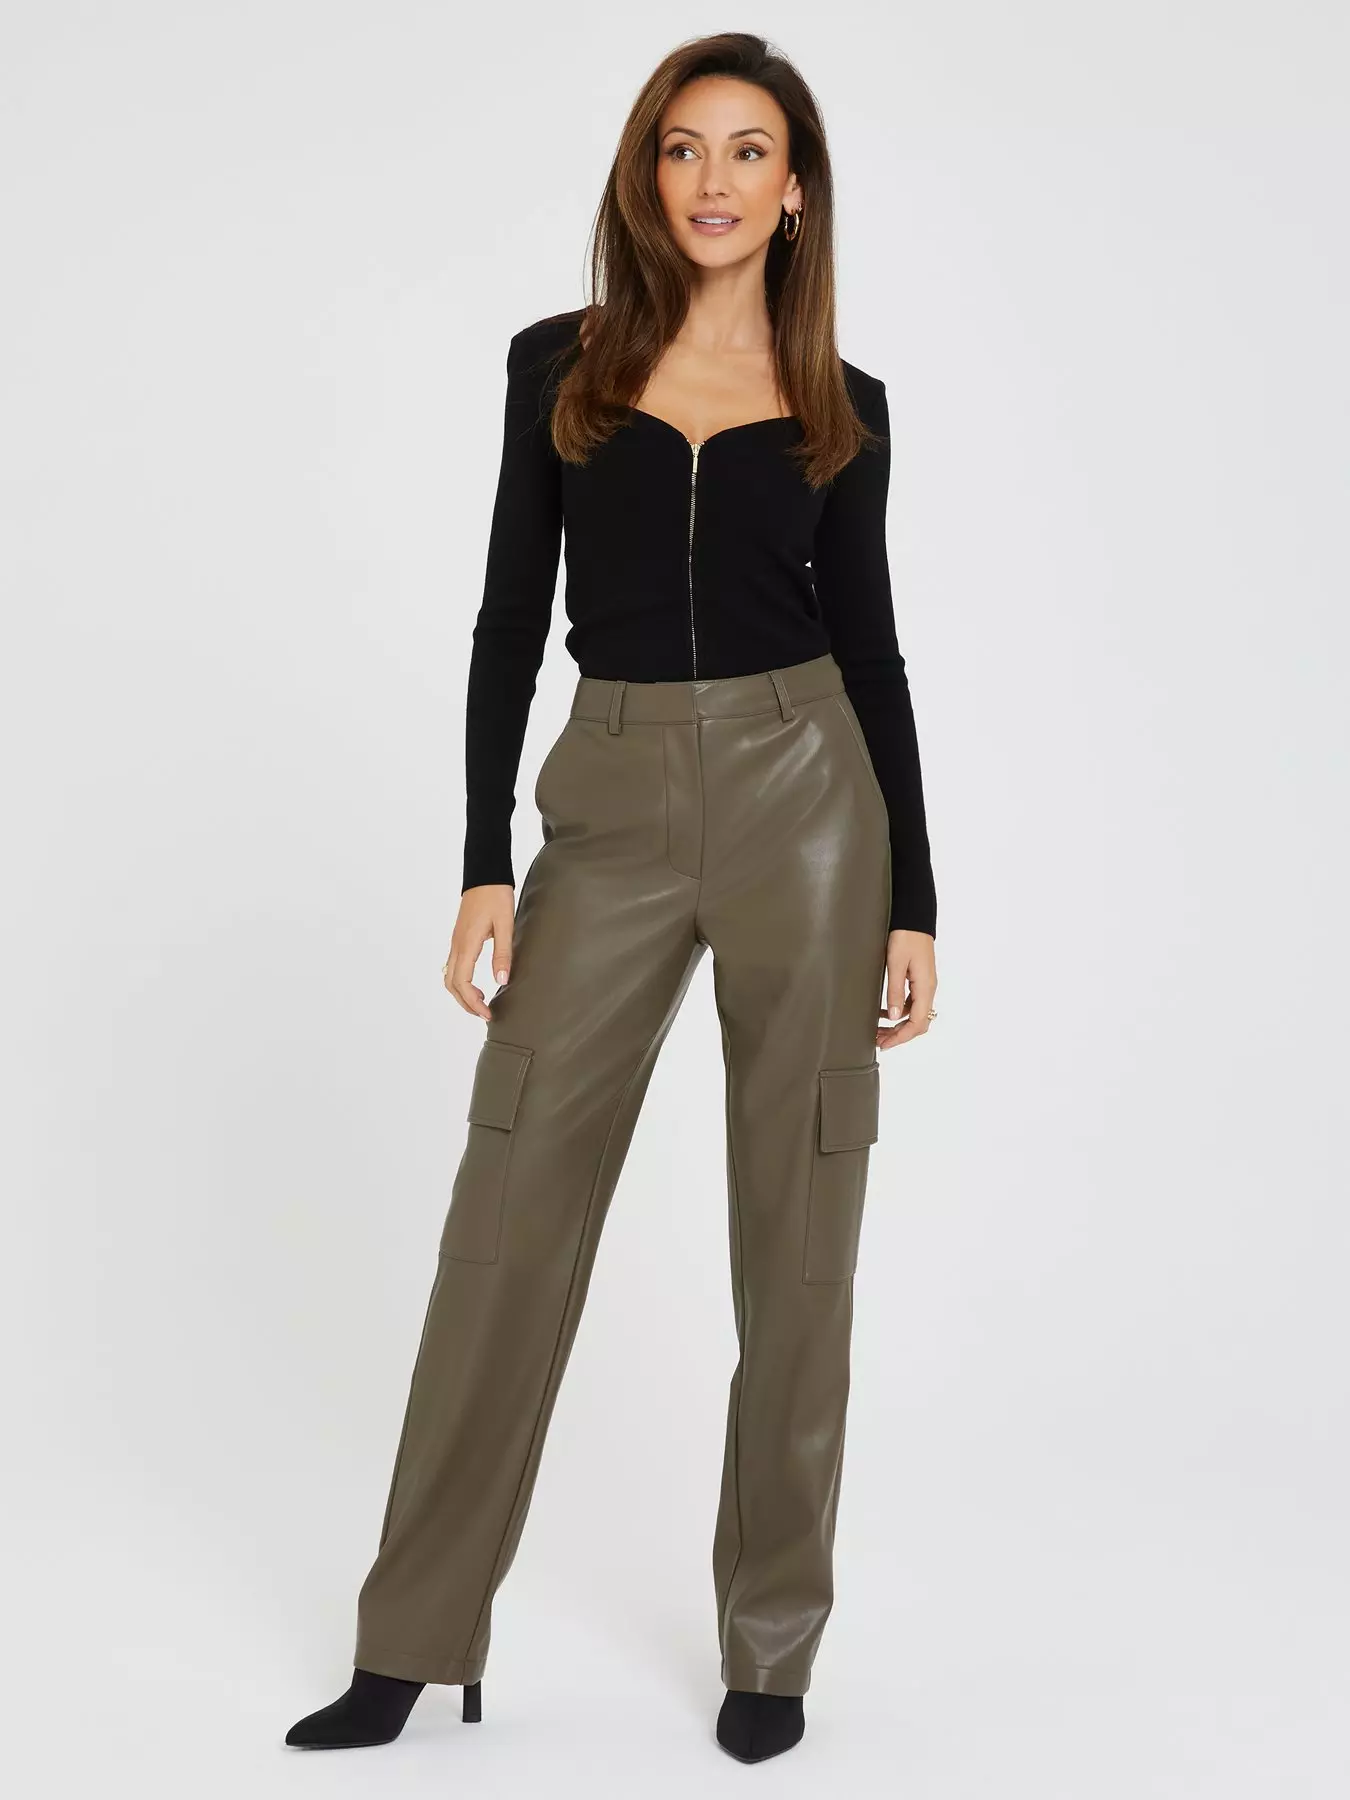 UK Women Faux Leather Pants Size 6-20 Elastic High Waist Pocket Trousers  Joggers